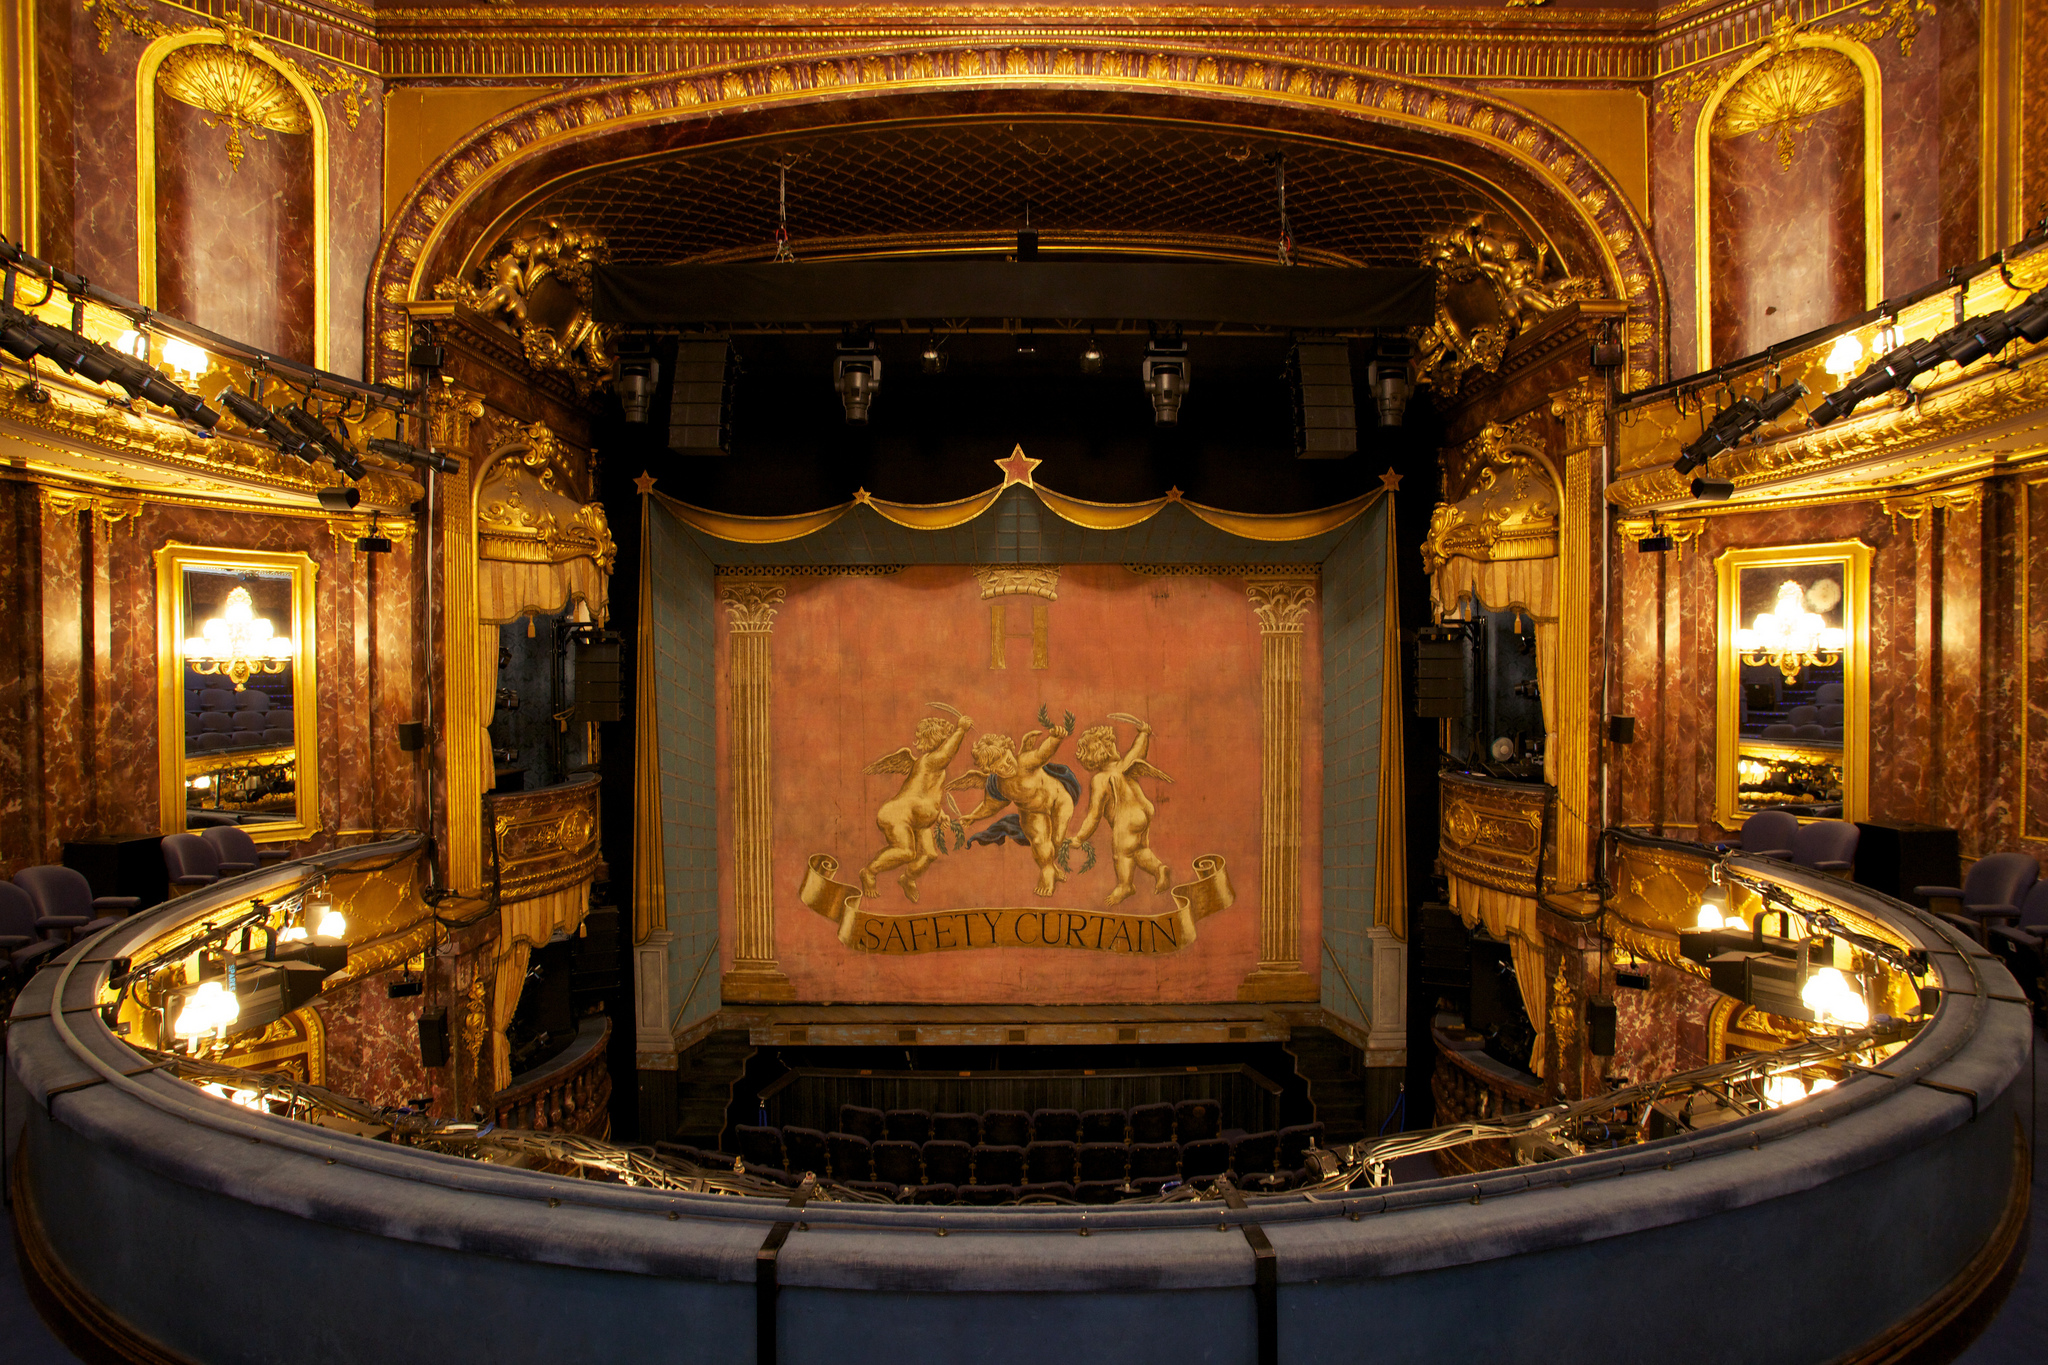 Theatre in use. Королевский театр Хеймаркет. Роял Хаймаркет театр Лондон. Бат Англия Королевский театр. Королевский театр Вестминстер.